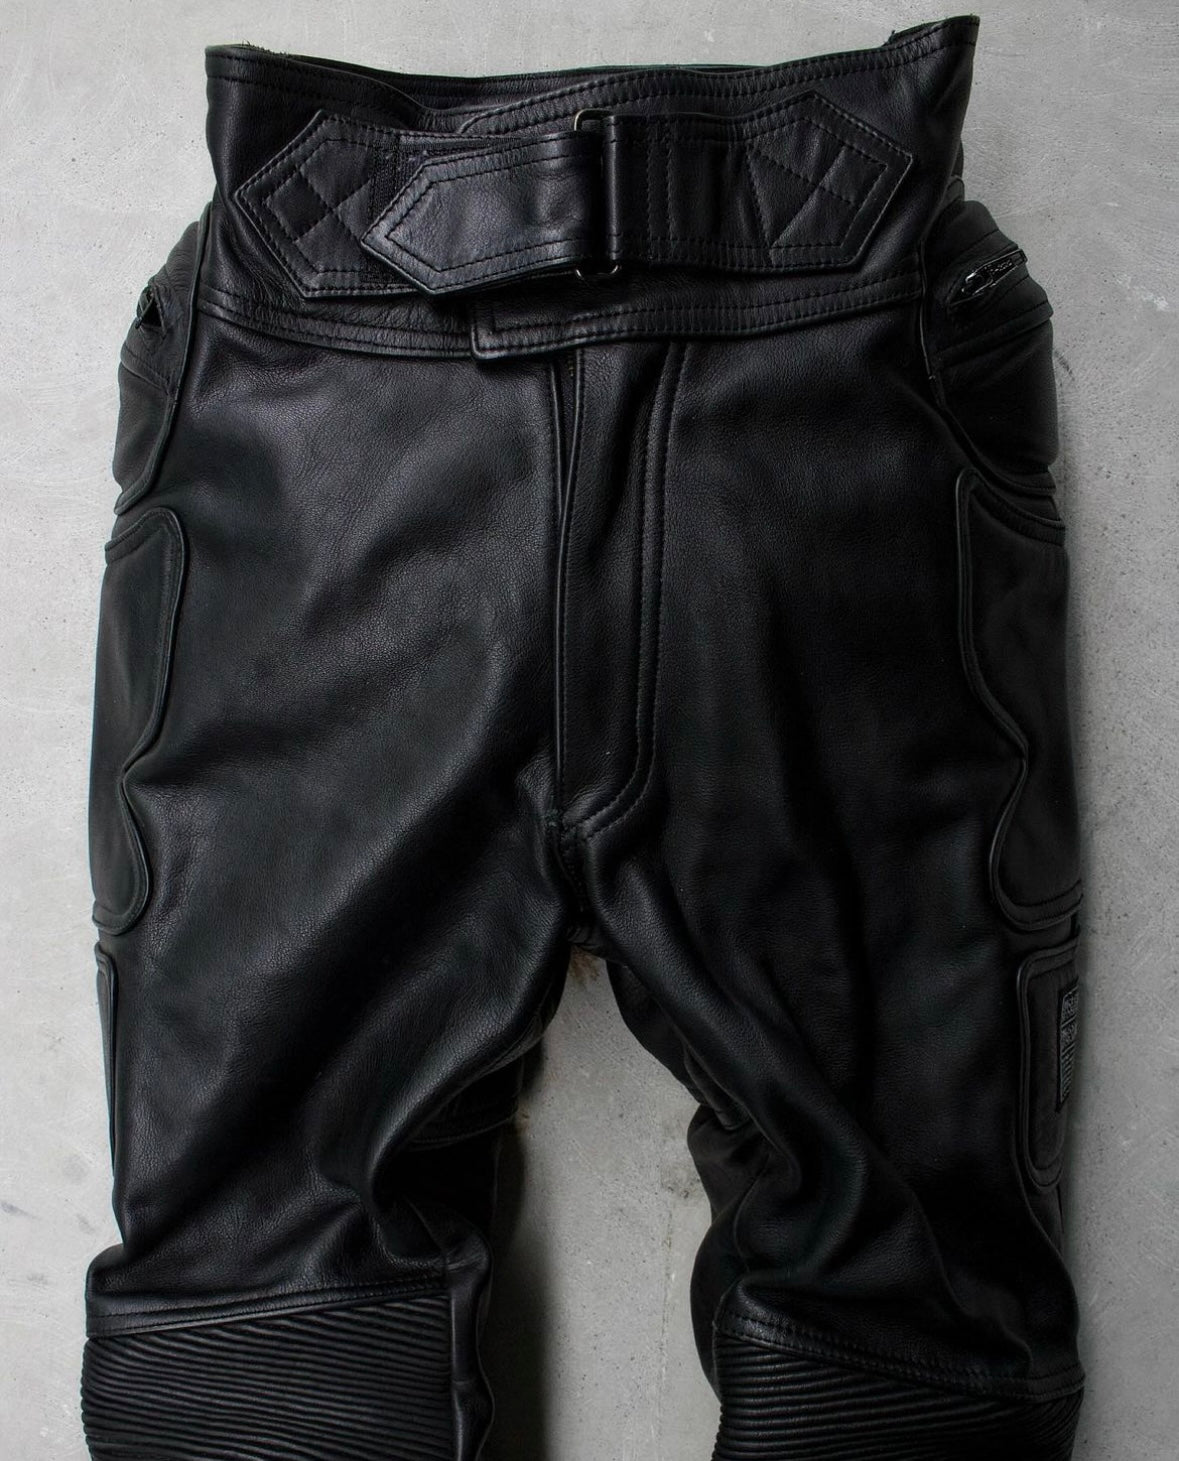 Kadoya K’s Leather Early 00s Padded Cowhide Leather Motorcycle Pants